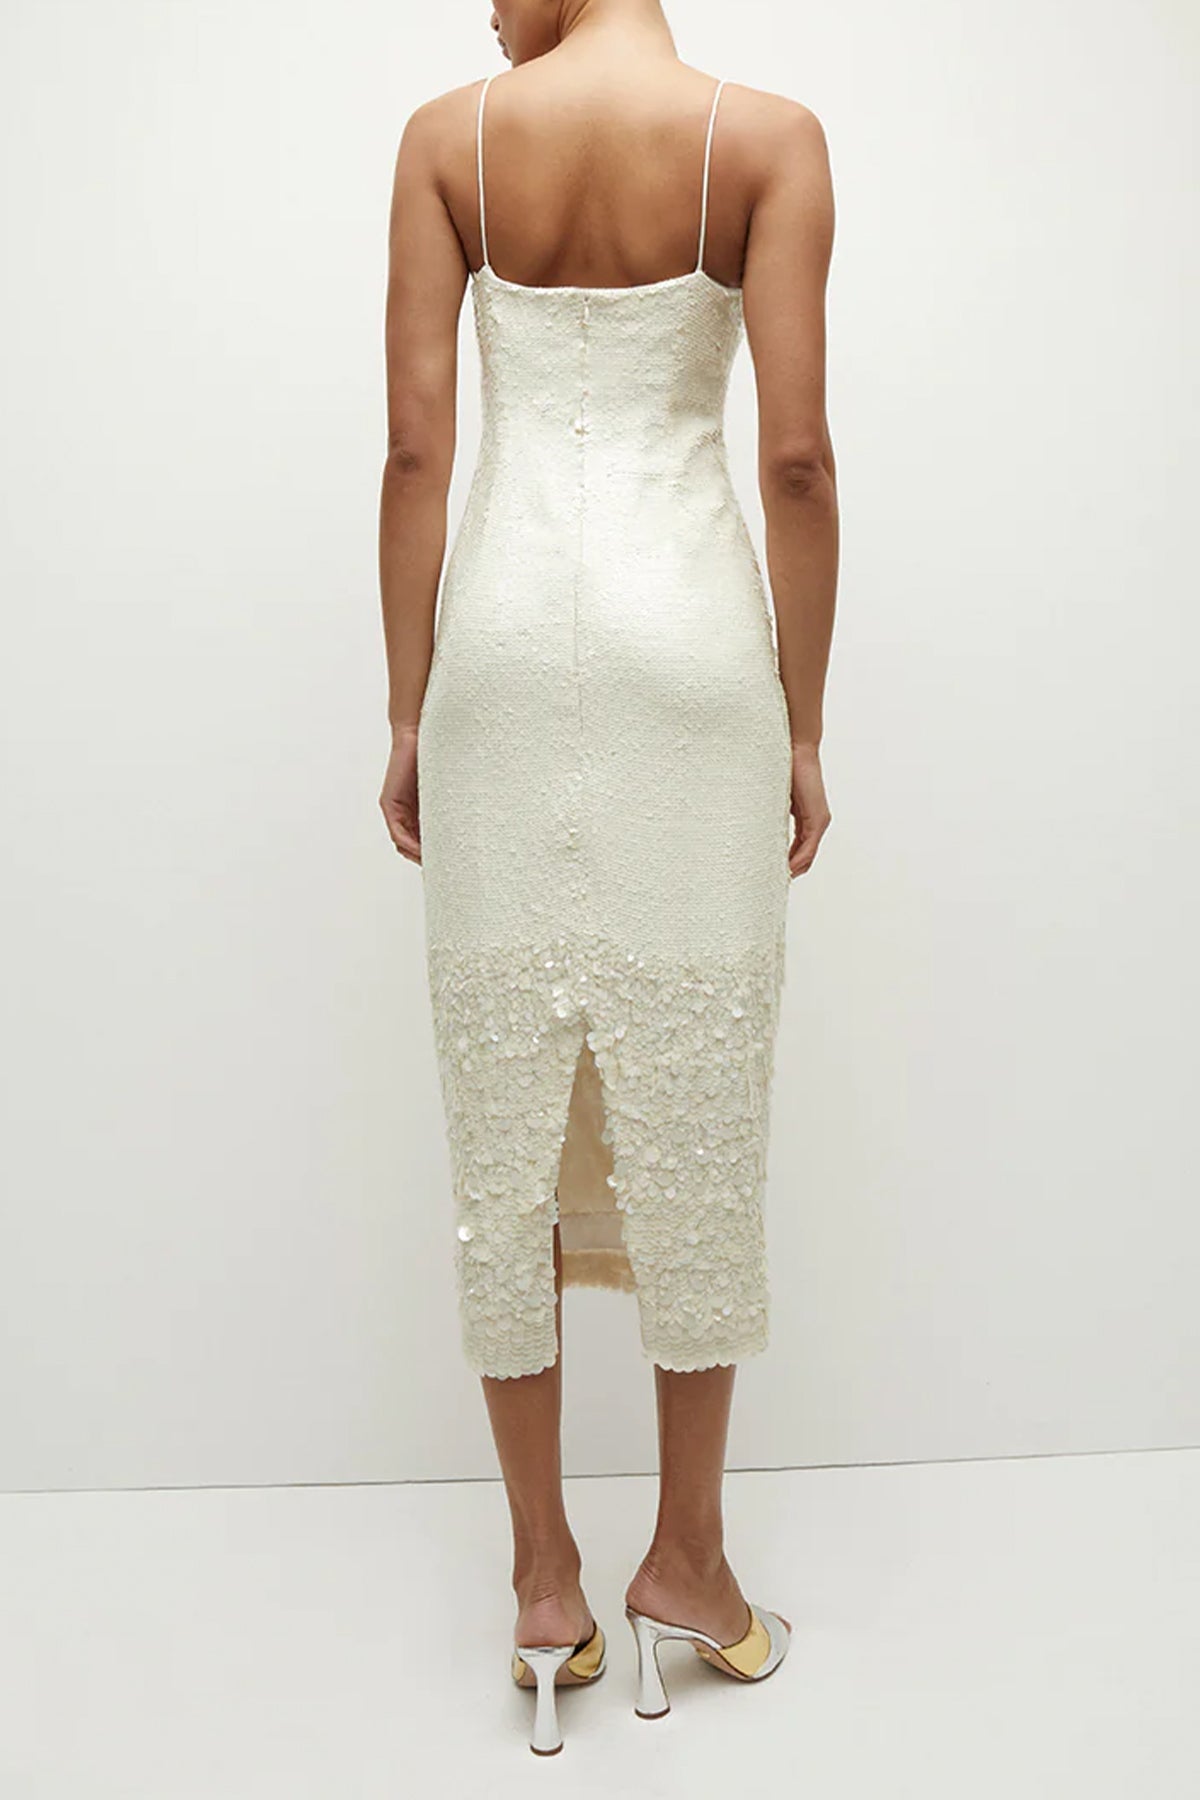 Perla Sequin Dress in Iridescent Off-White - shop-olivia.com